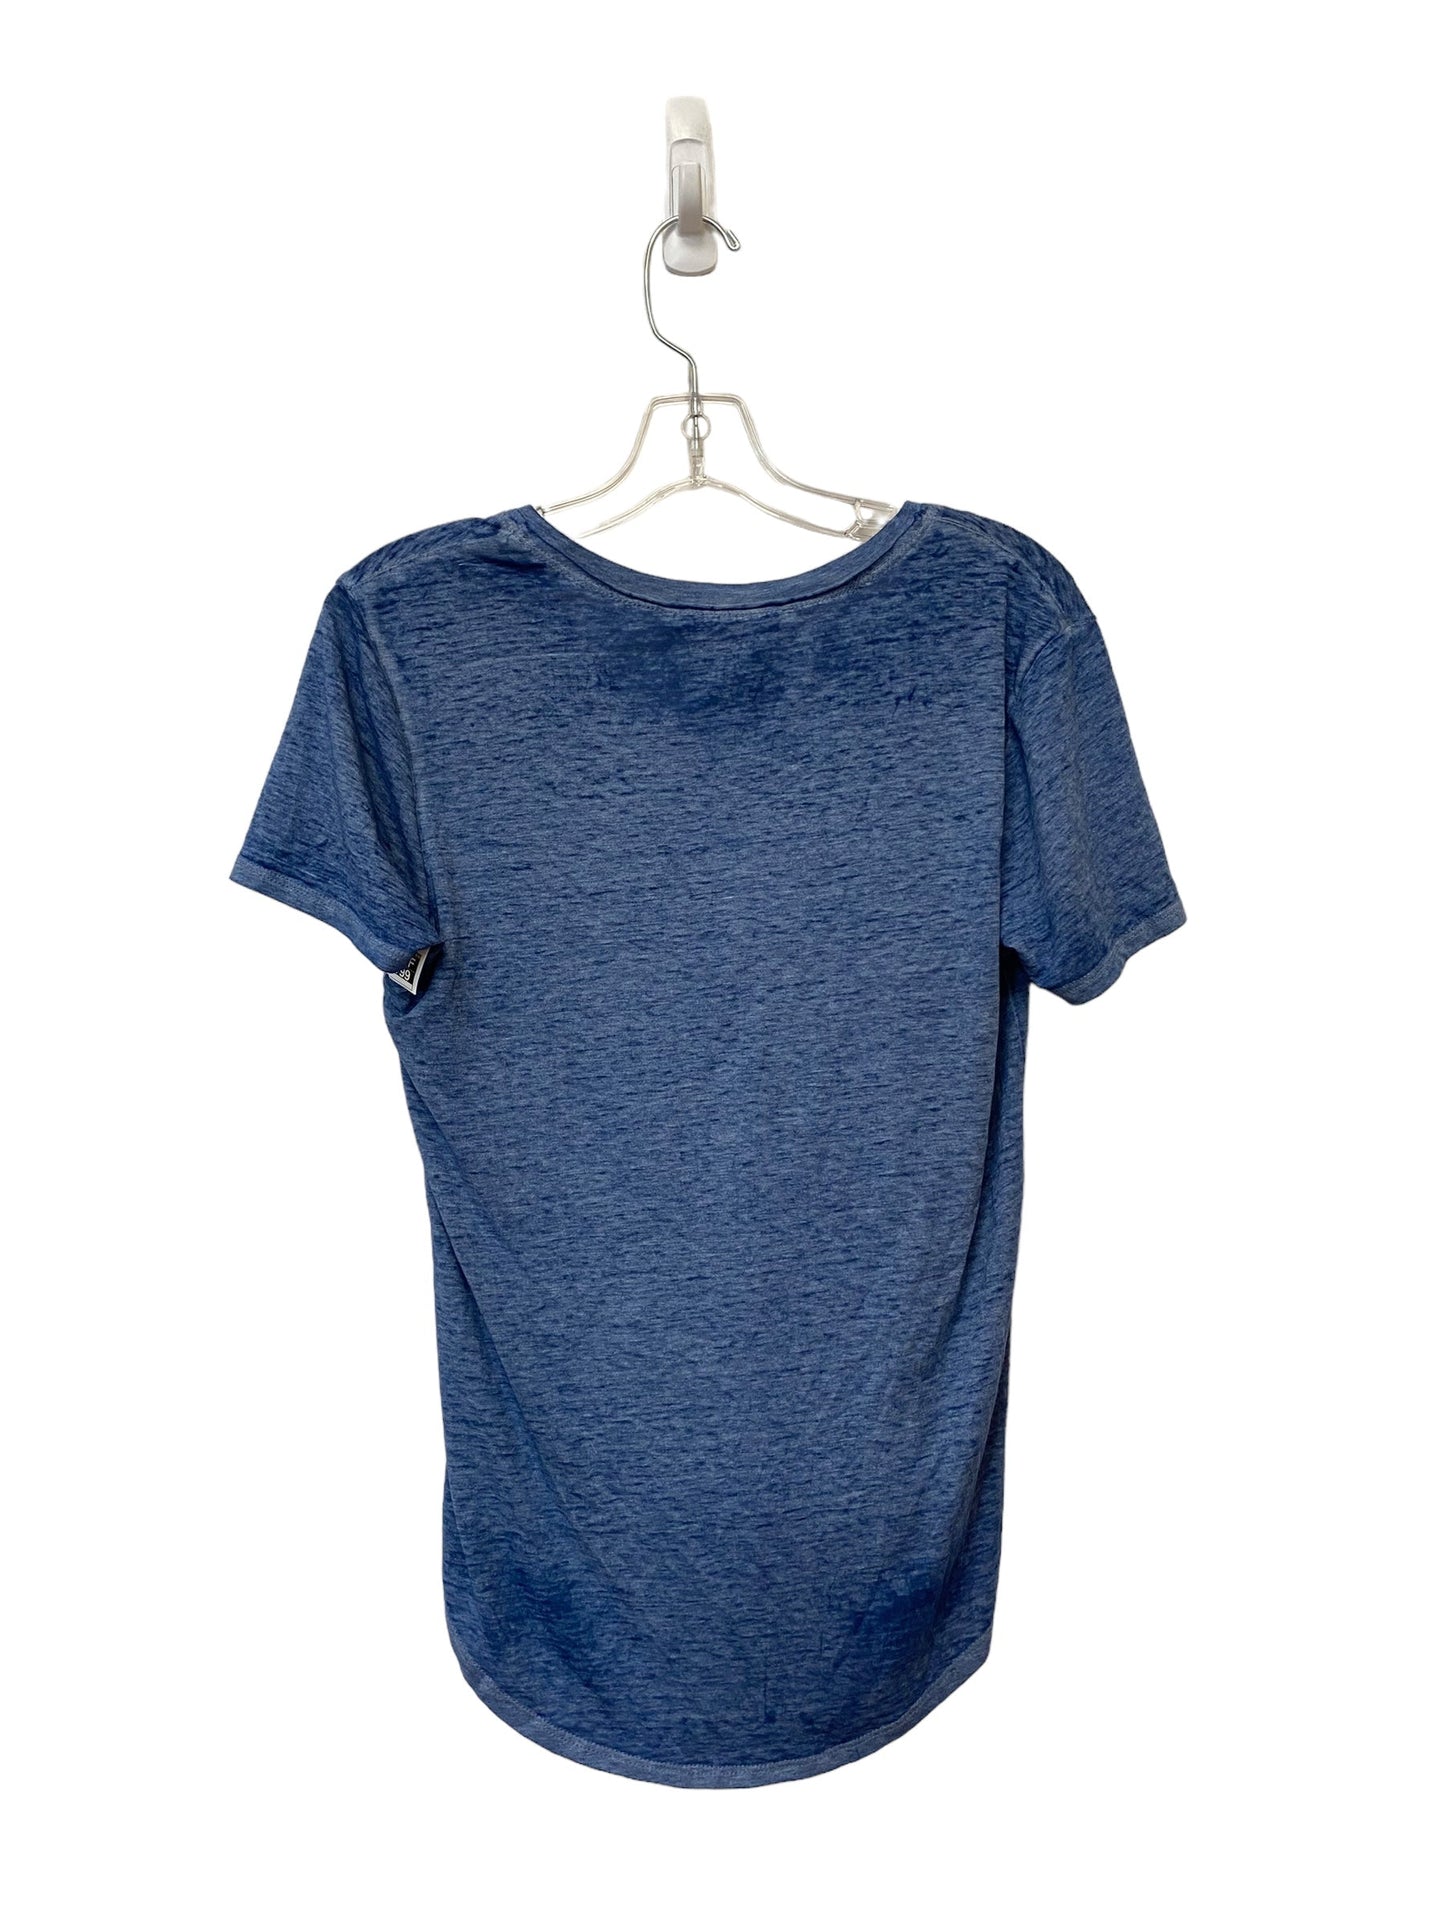 Blue Top Short Sleeve Basic American Rag, Size S